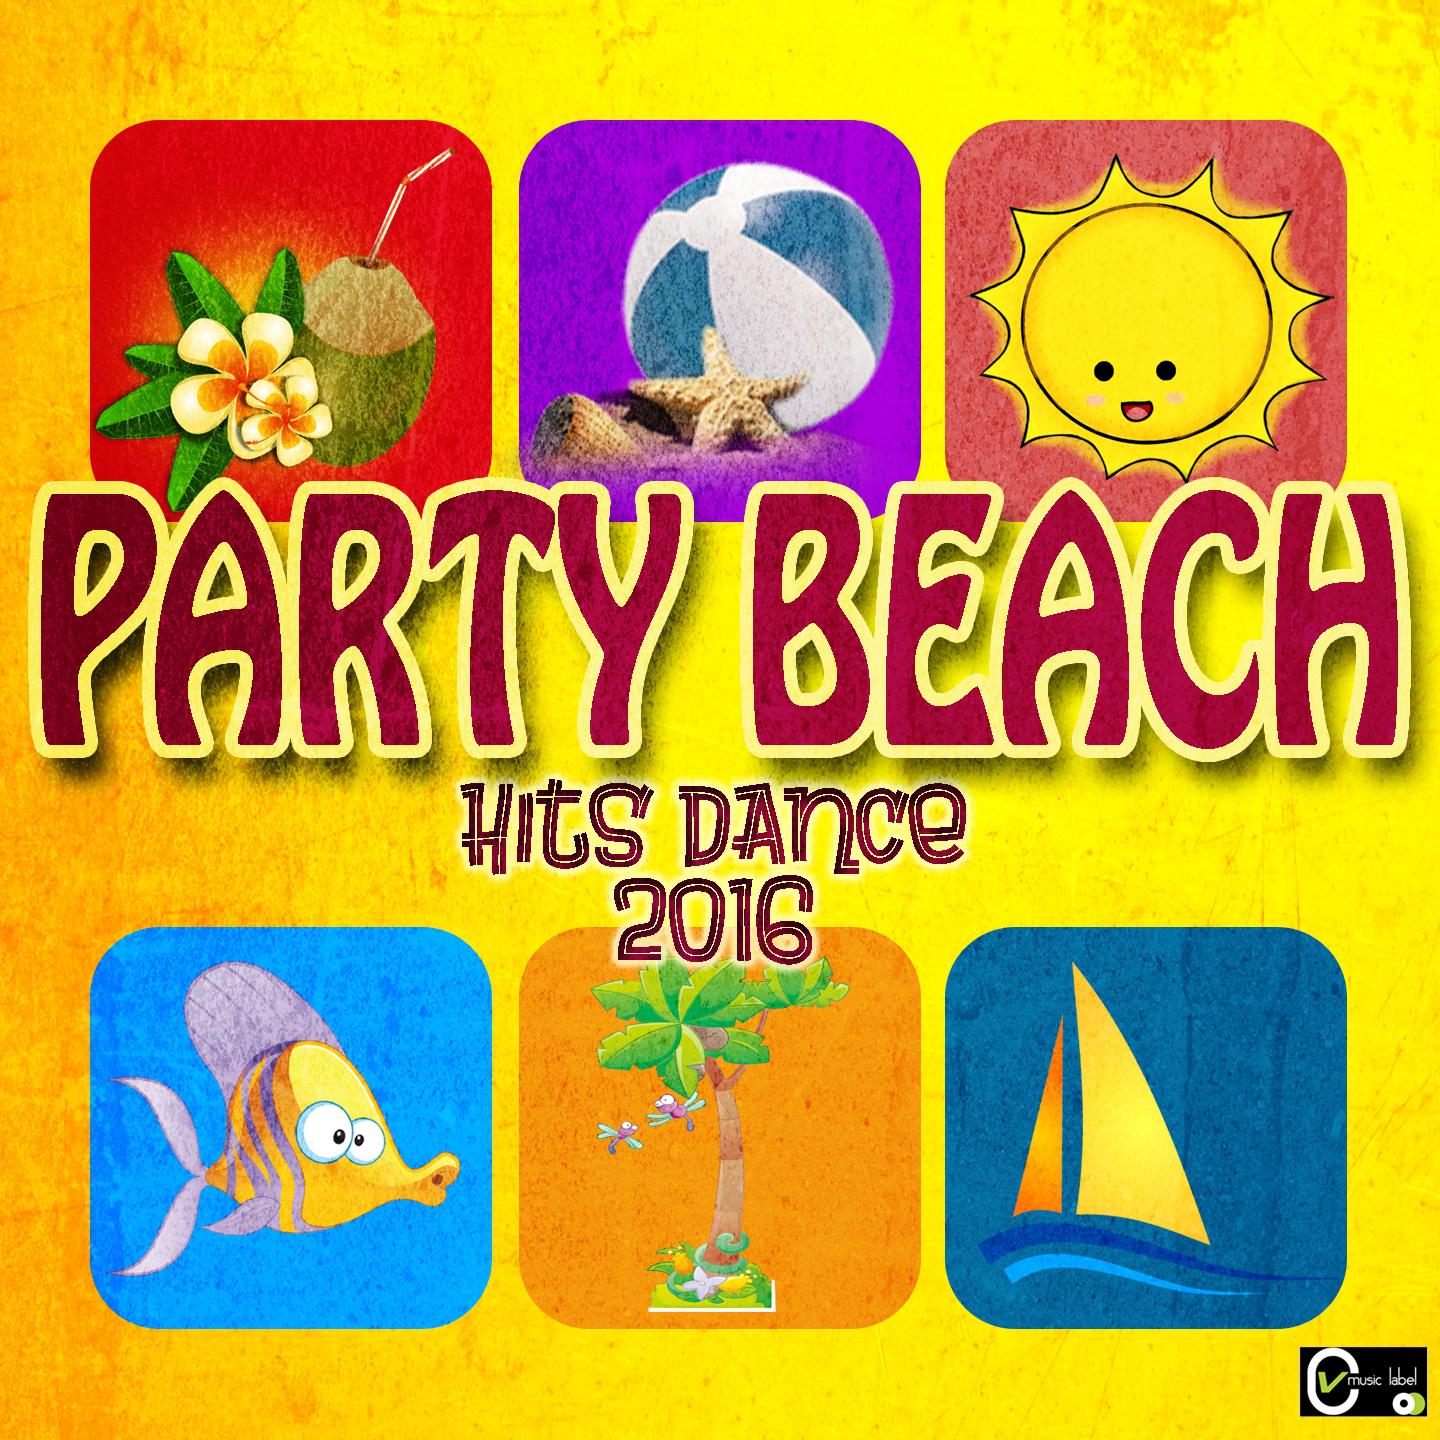 Party Beach Hits Dance 2016